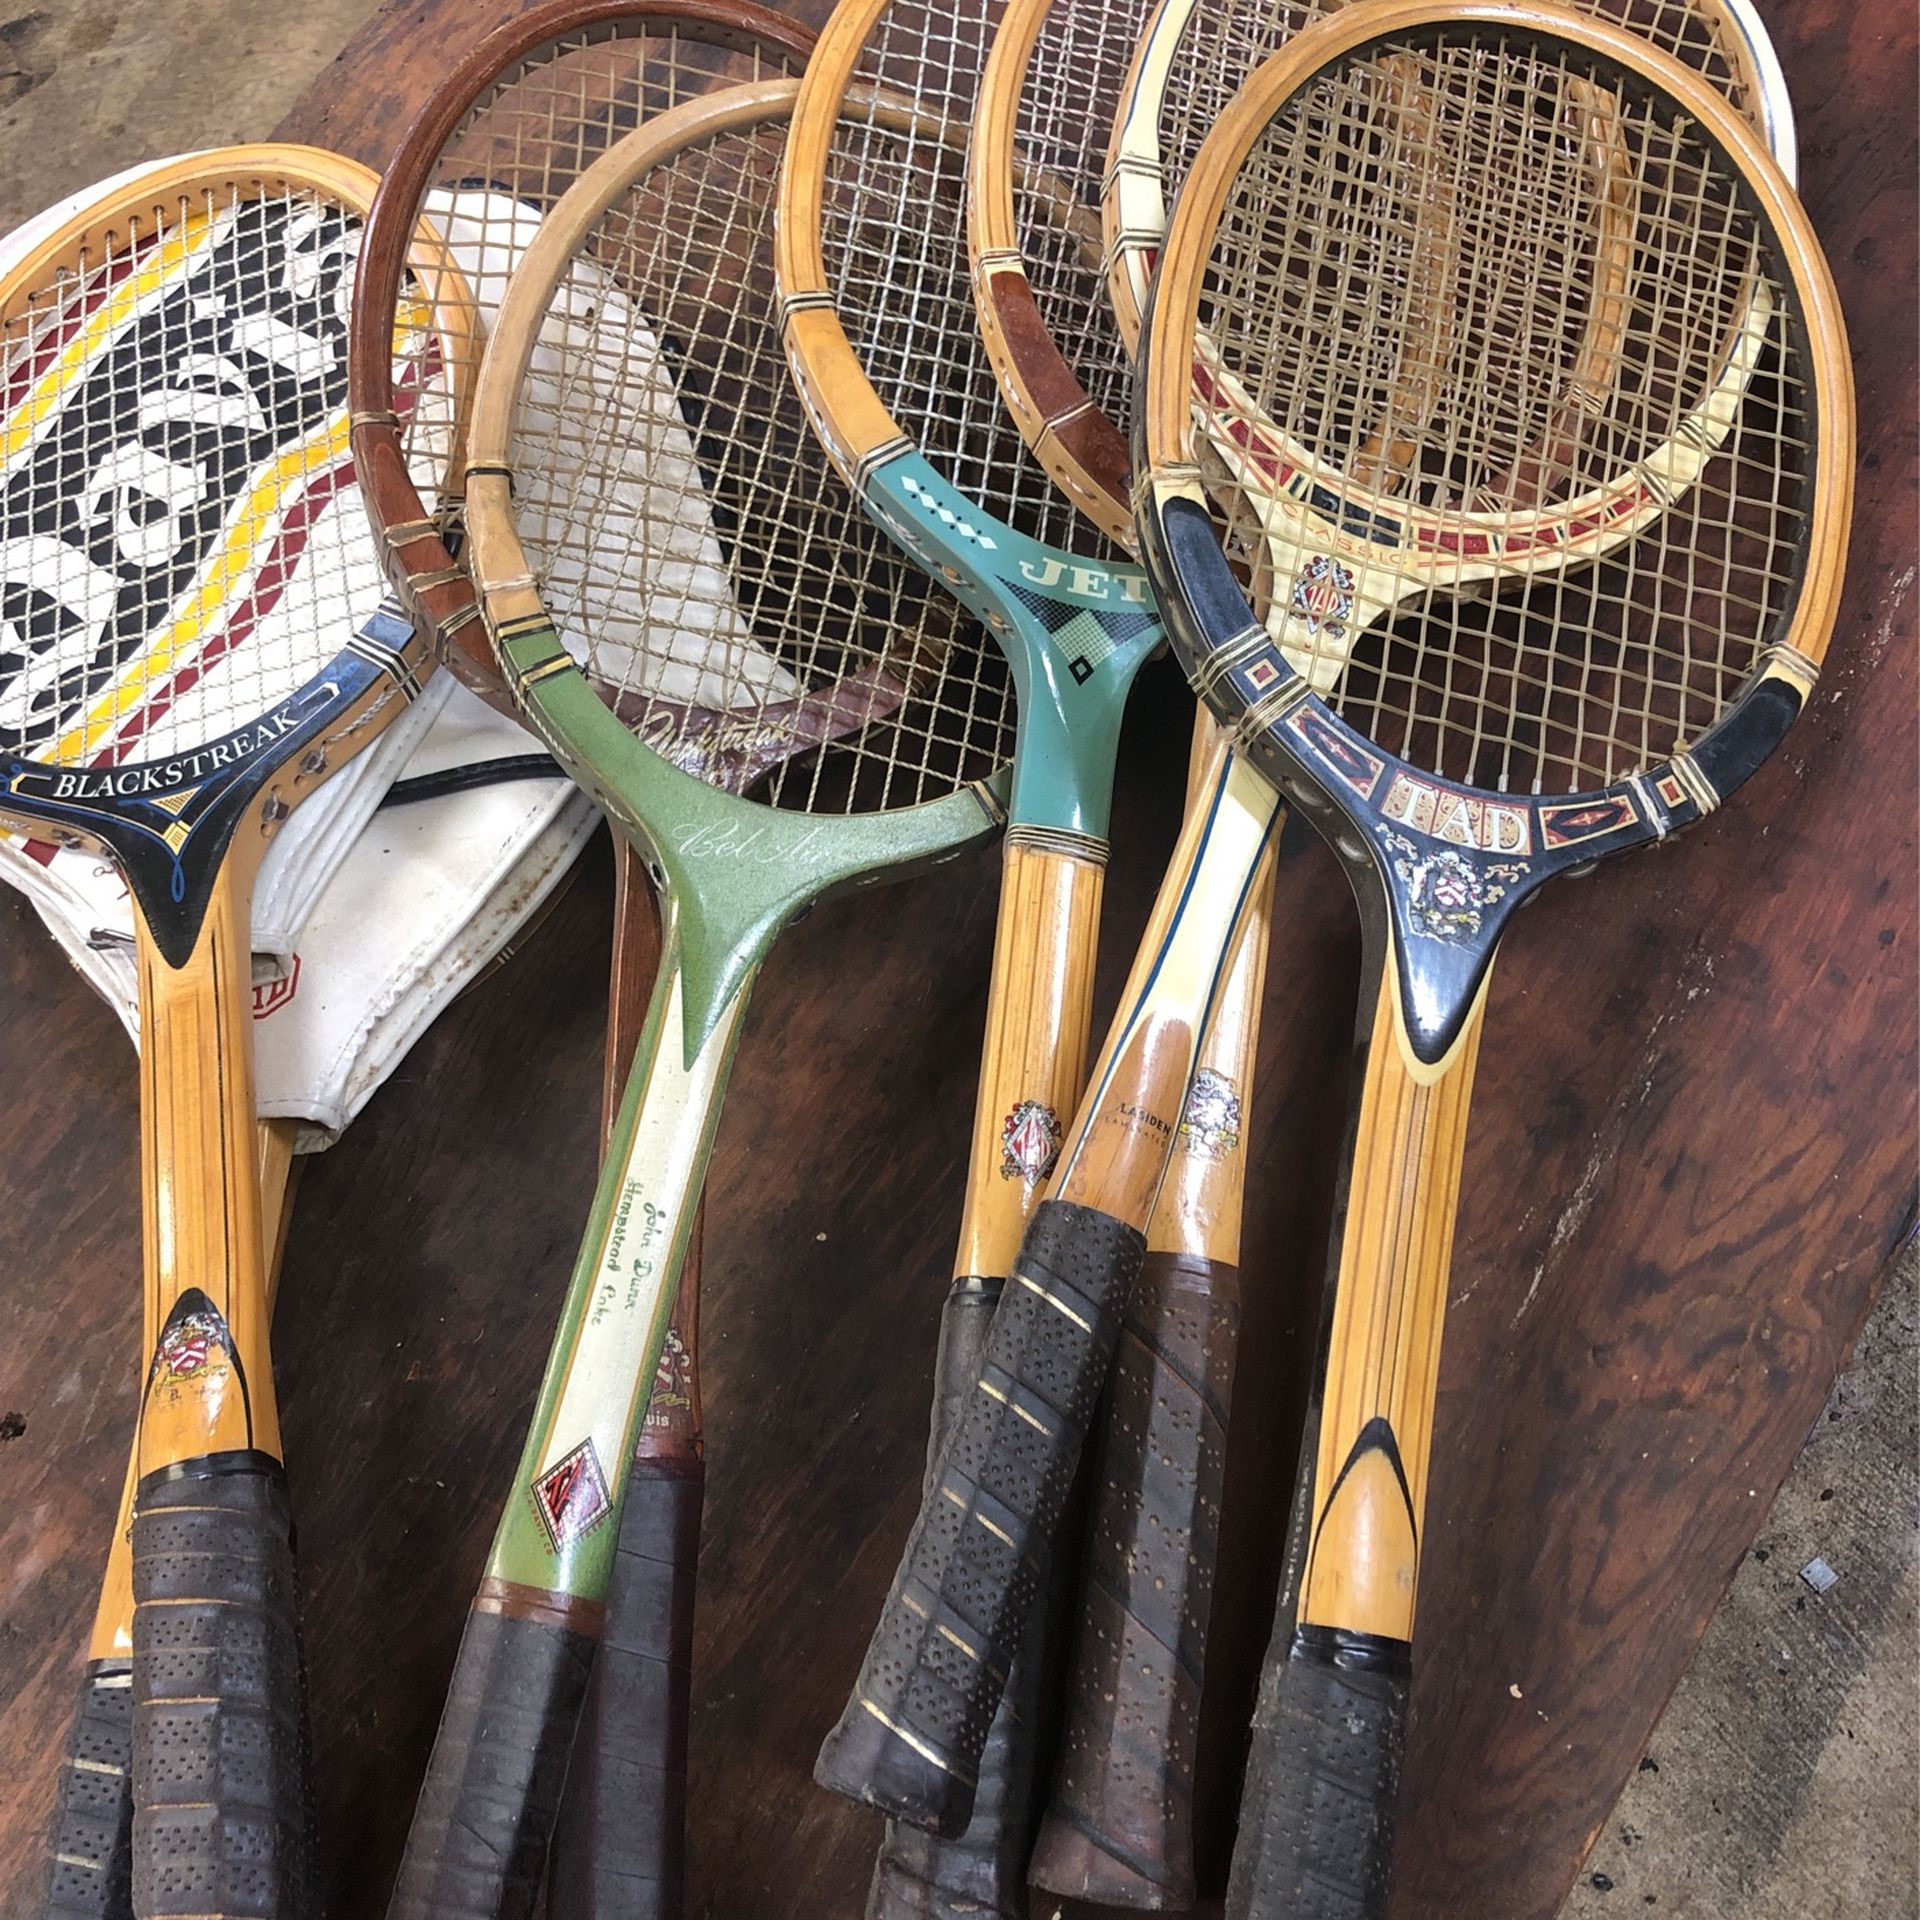 10 Vintage Tennis Rackets